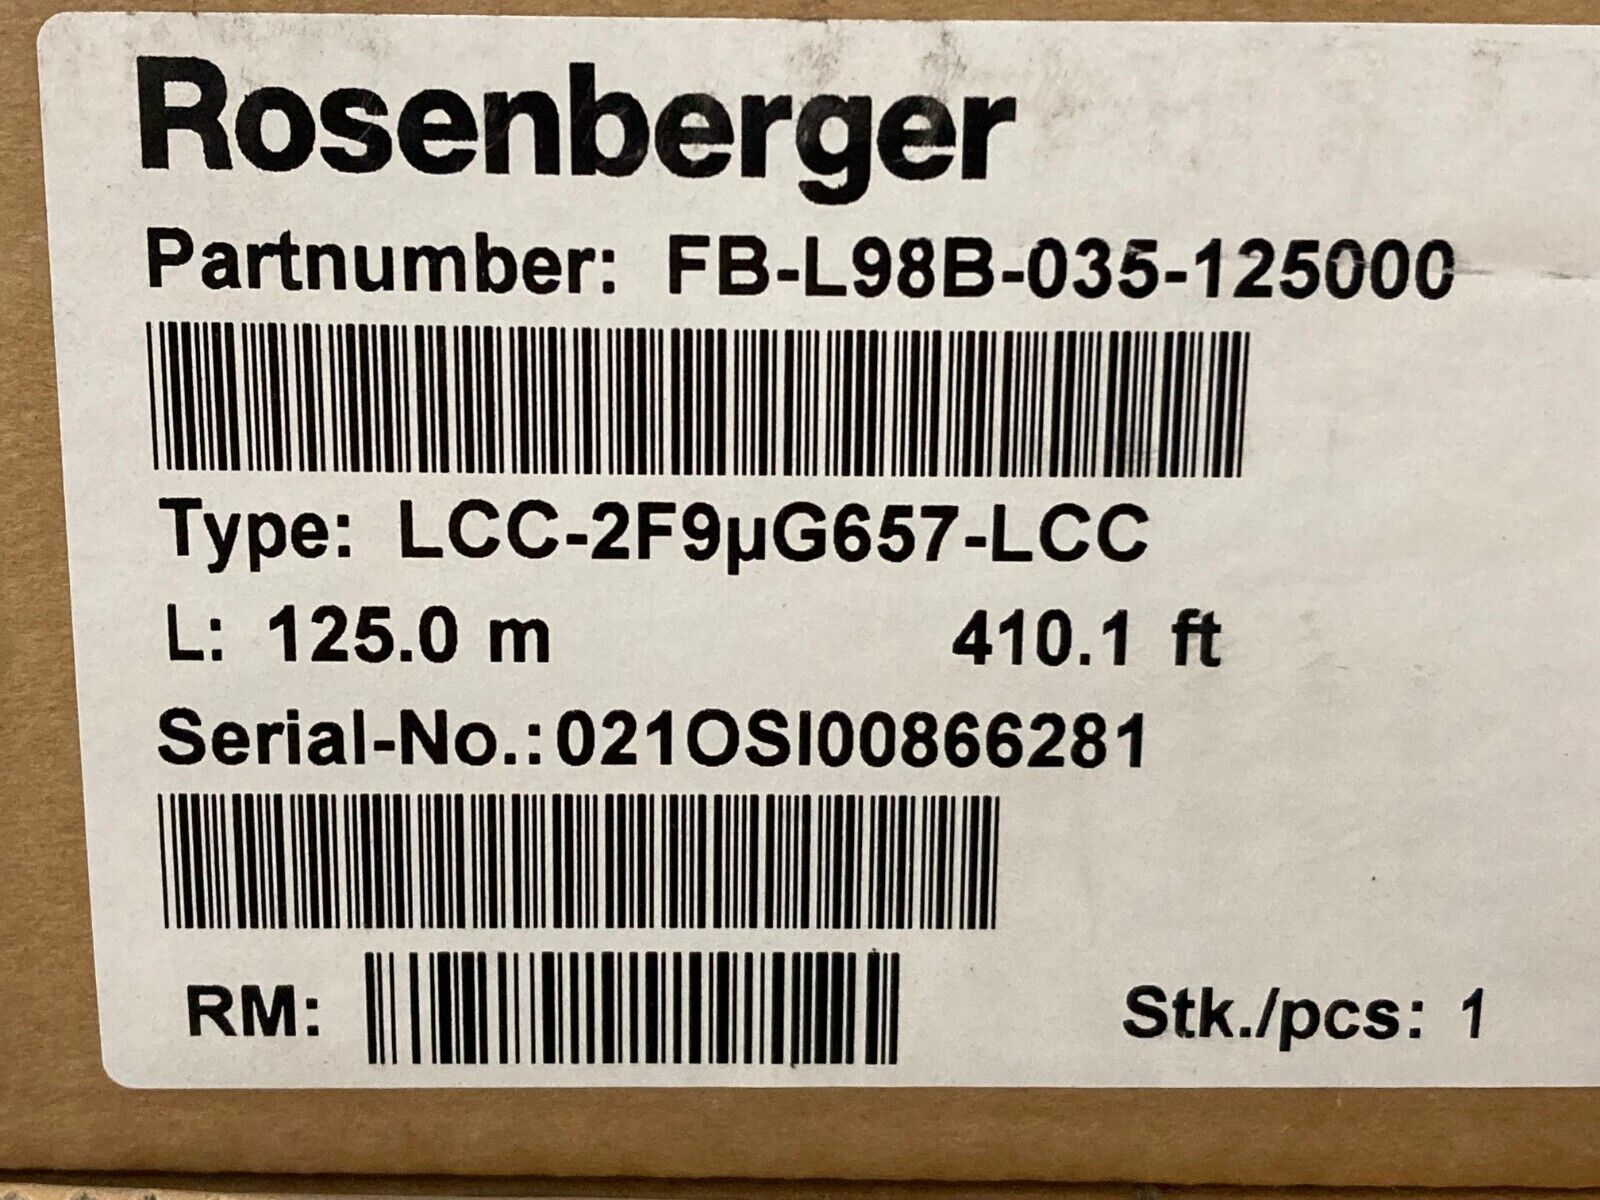 Rosenberger FB-L98B-035-125000 Fiber Optic Cable  LCC-2F9uG657-LCC 125.0 m - NIB